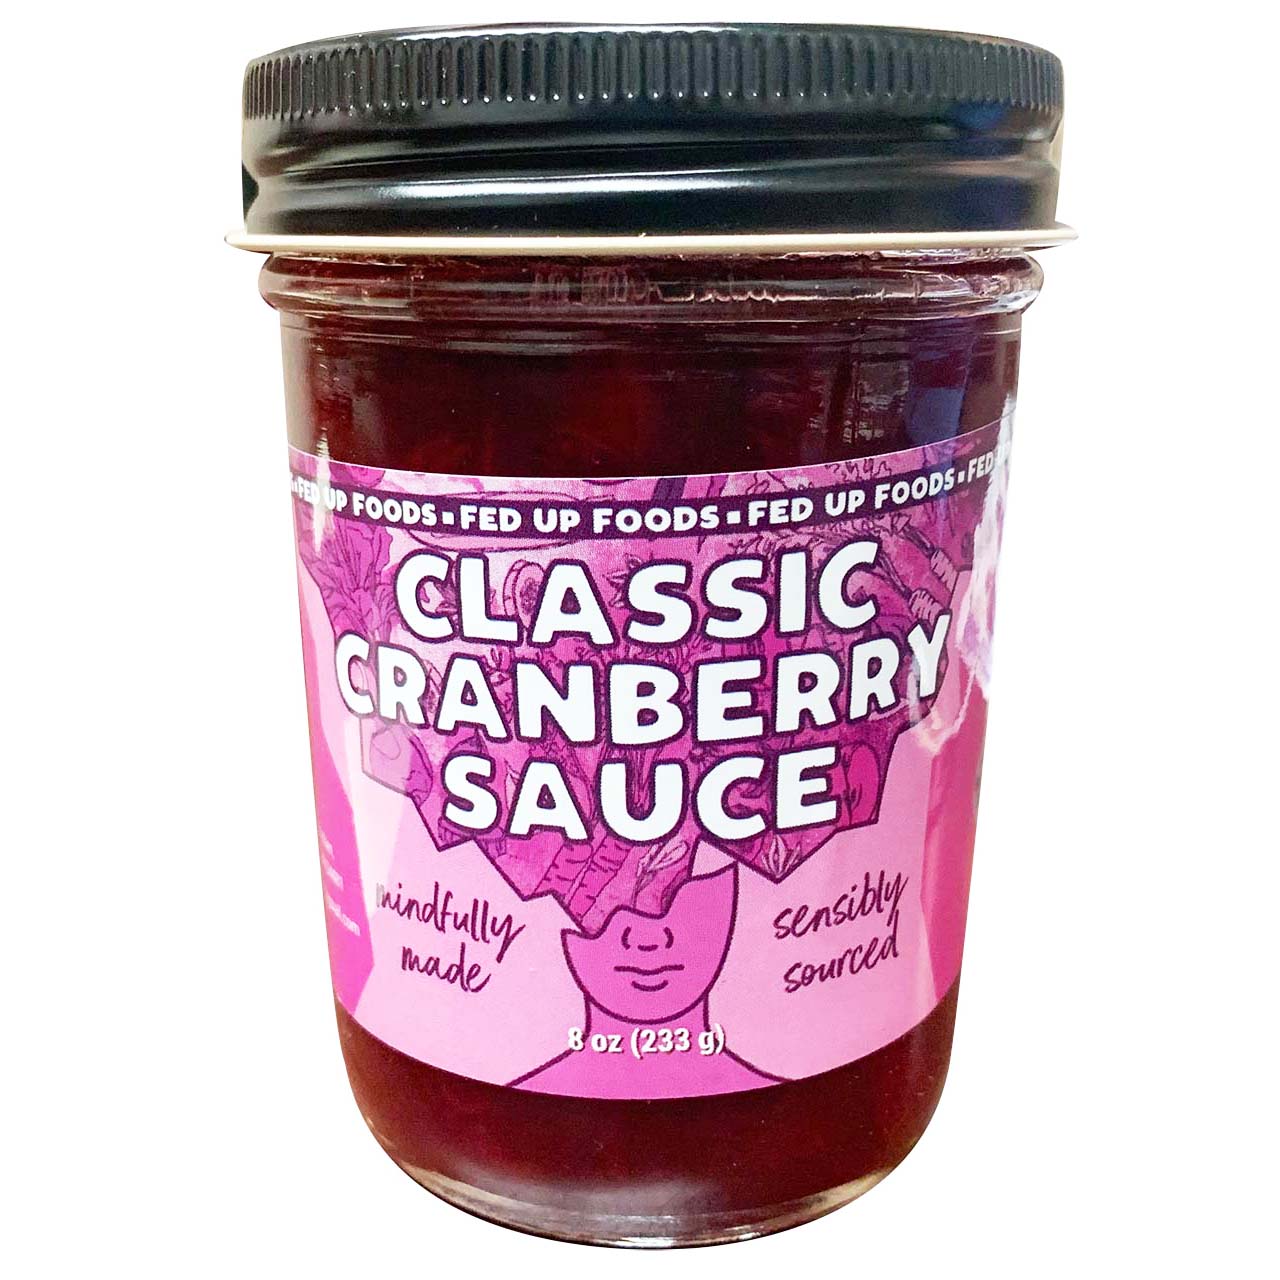 Cranberry Sauce - Classic